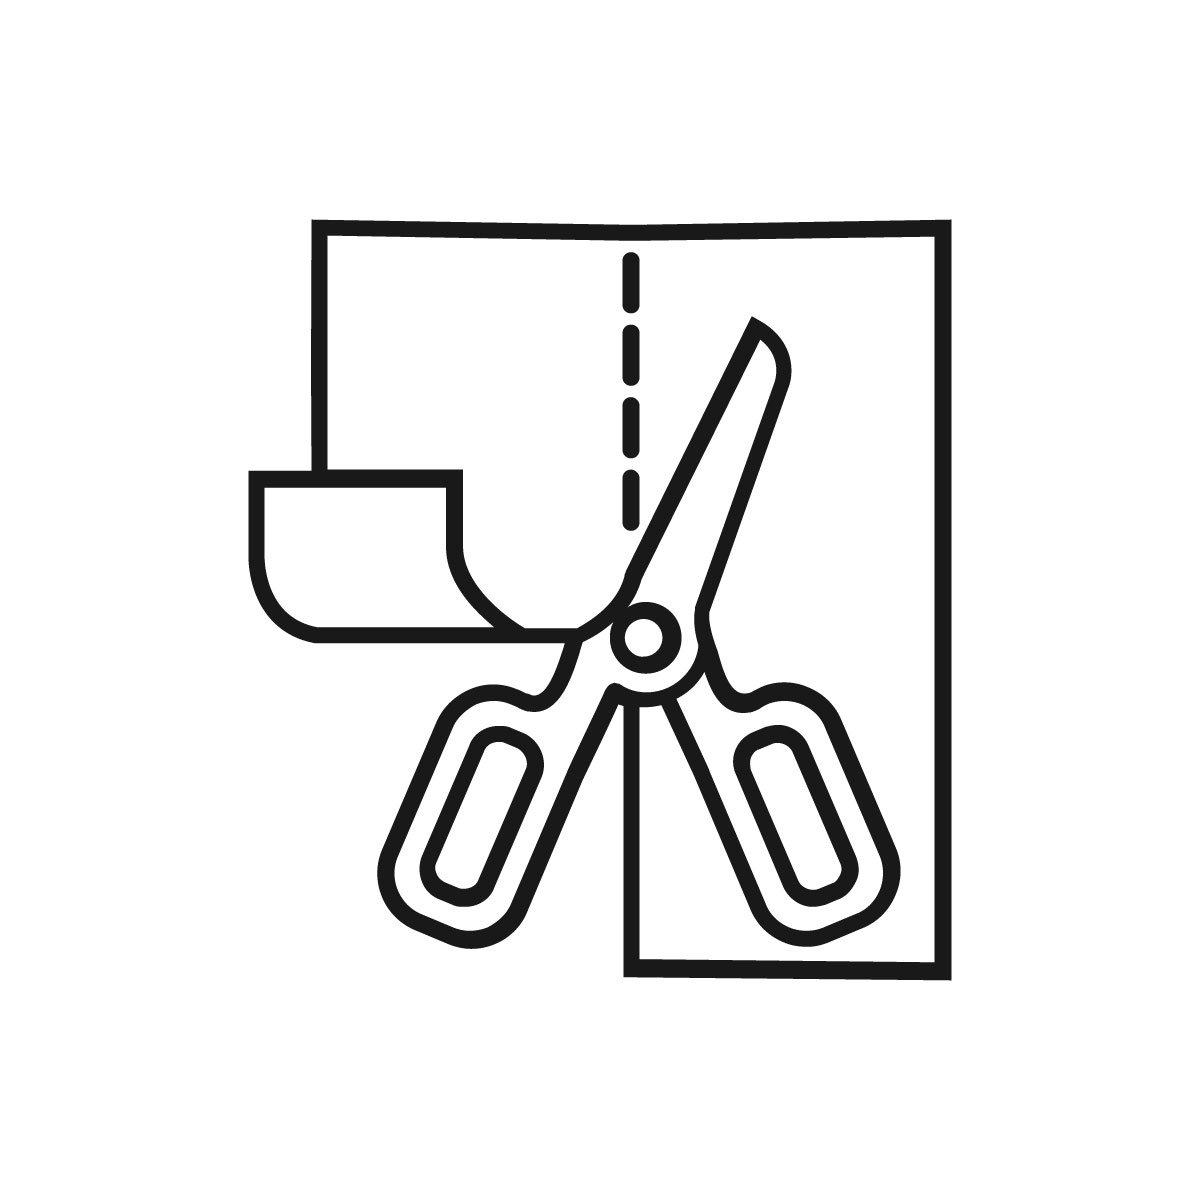 noun-scissors-151333-1A1A1A.jpg